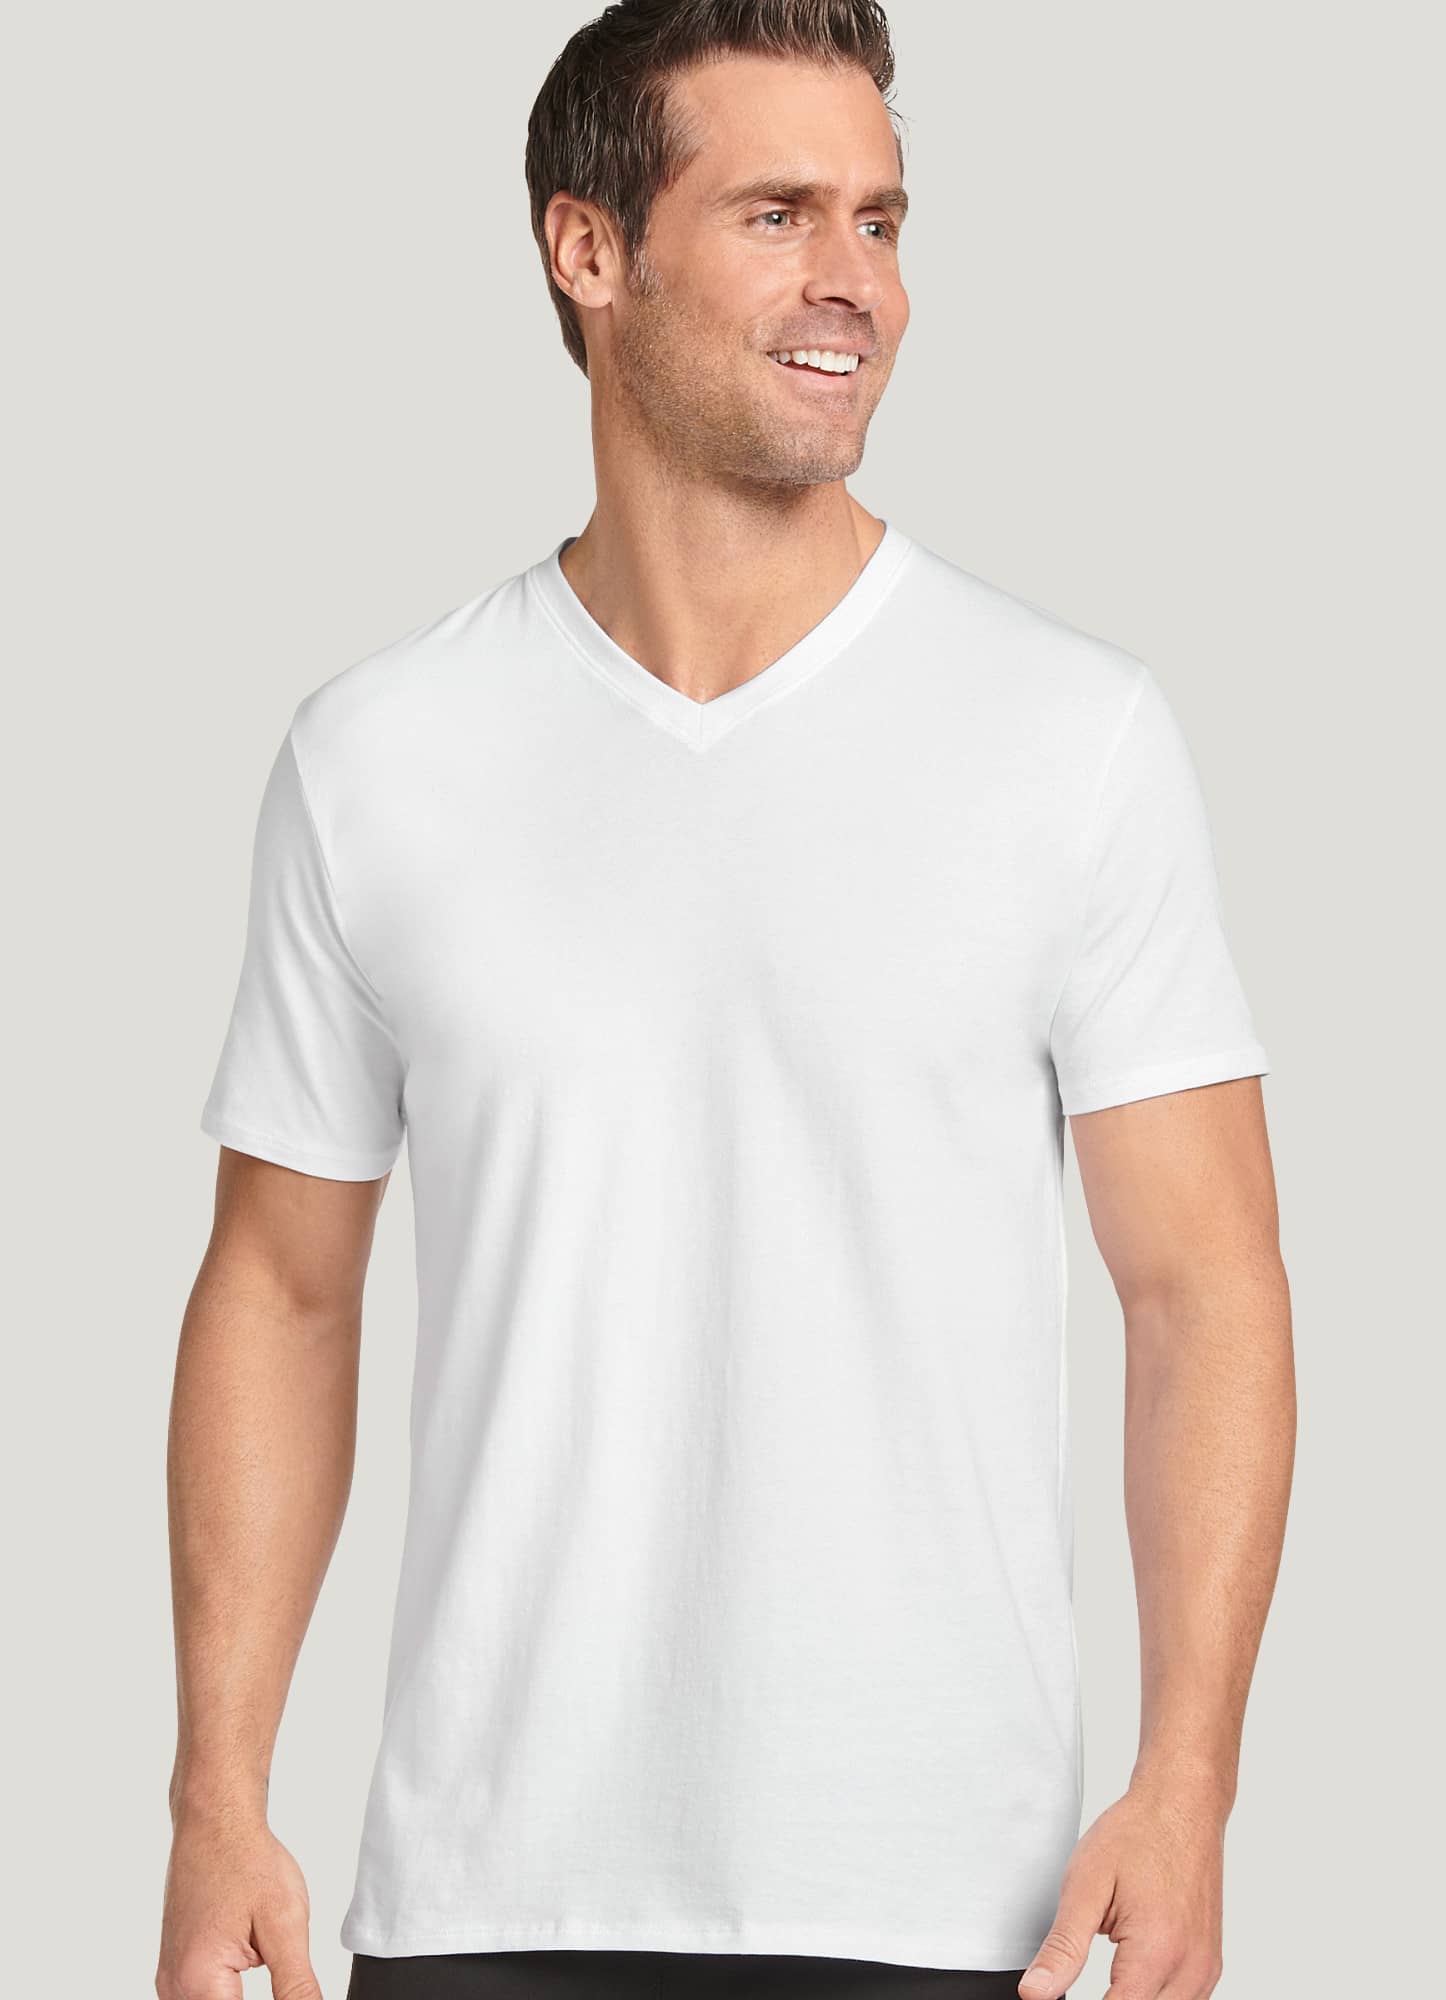 Jockey® Cotton Stretch V-Neck T-Shirt - 3 Pack